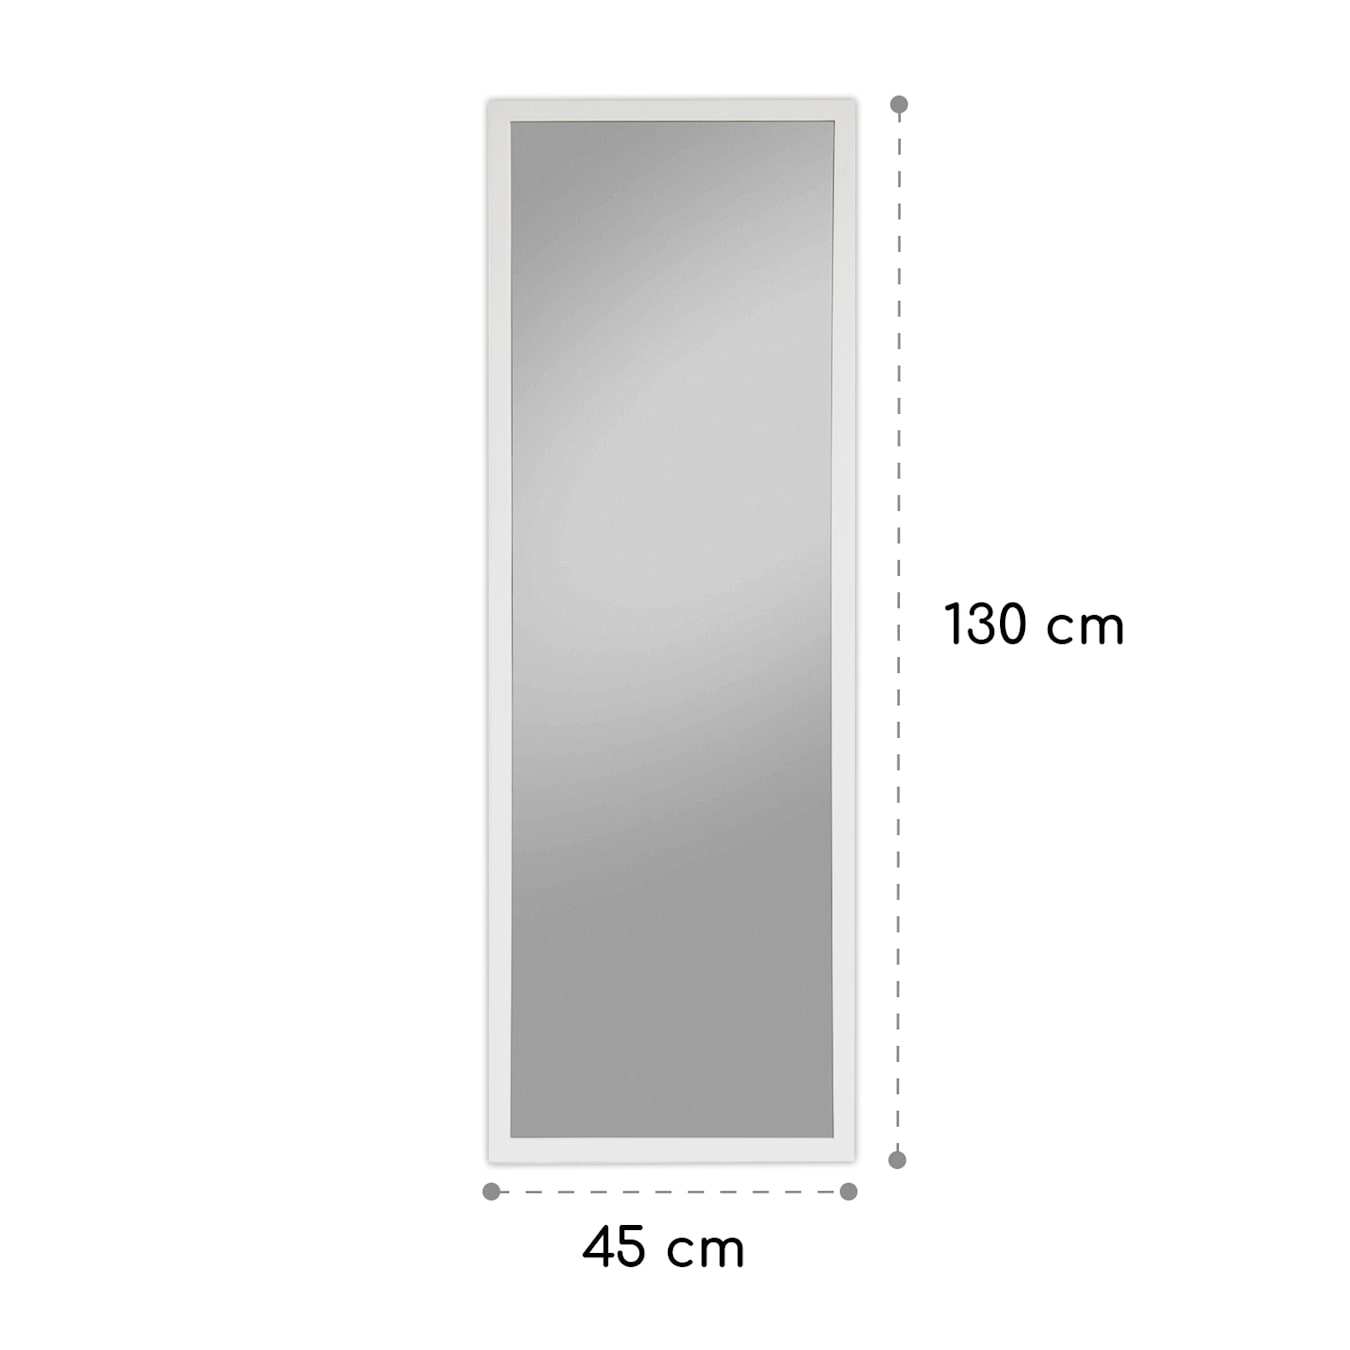 Tükör, Luton, Fali tükör valódi fából téglalap alakú 130 x 45 cm Fehér